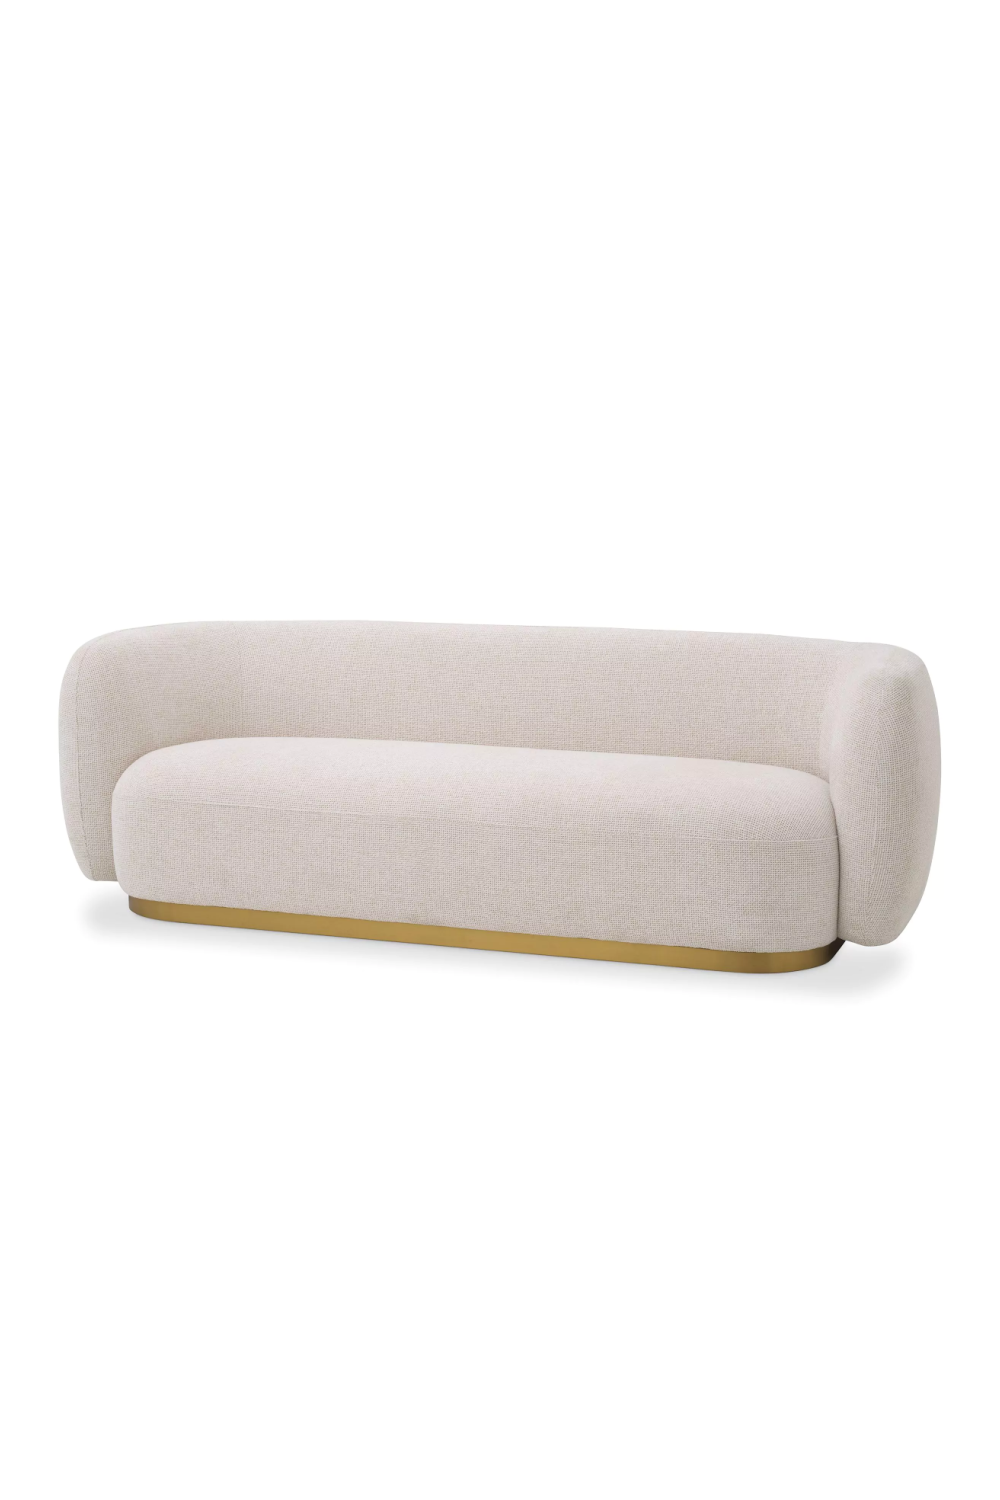 White Curved Sofa | Eichholtz Roxy | Oroa.com